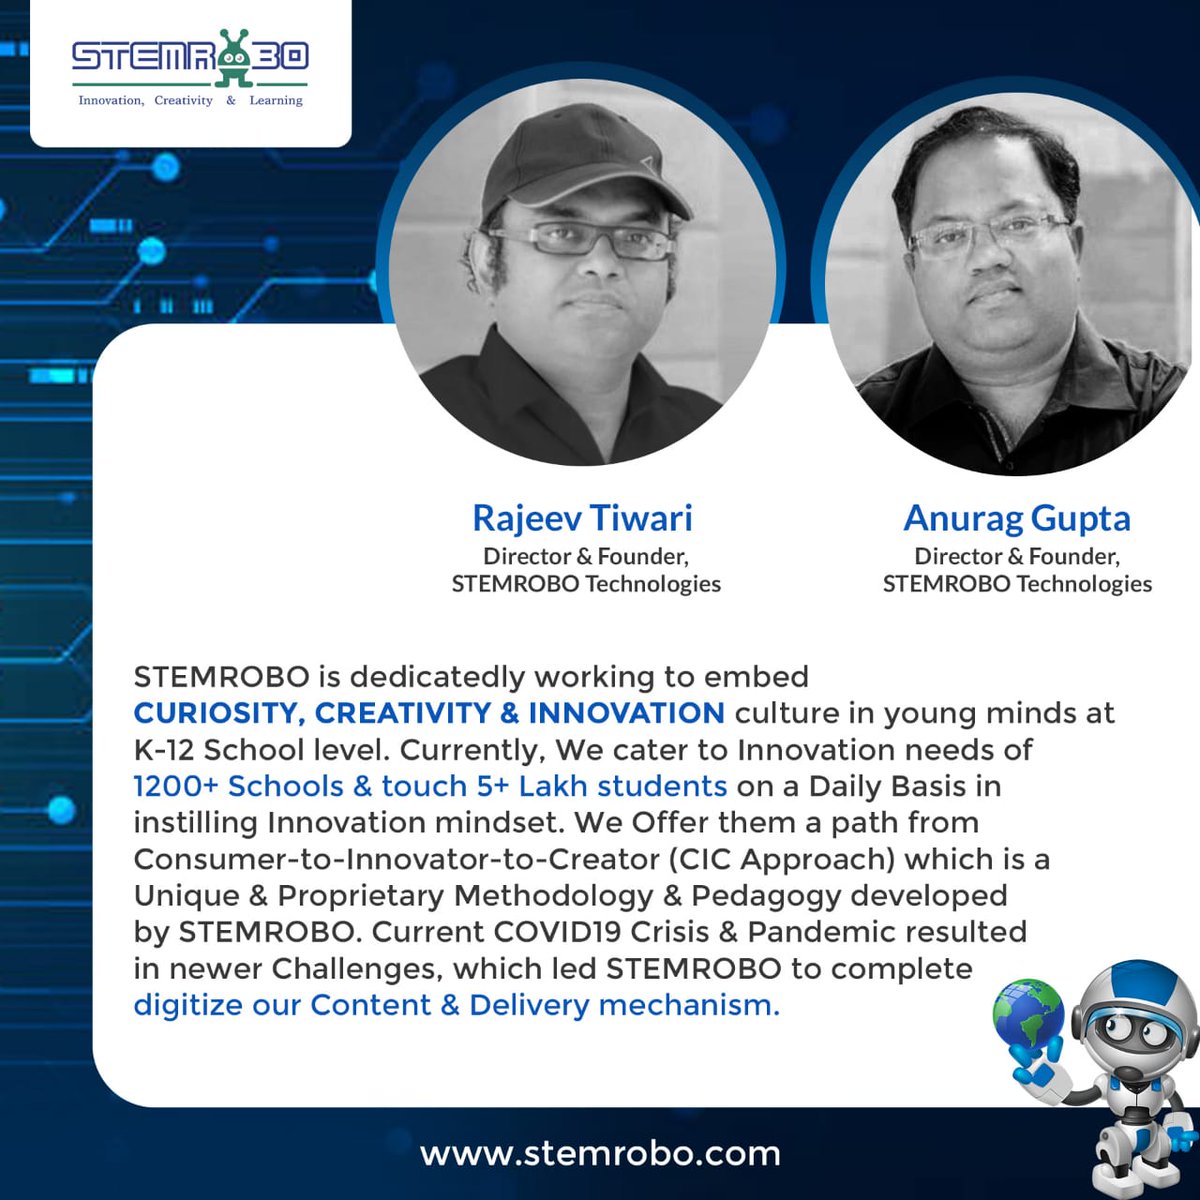 Words by the Founders of STEMROBO….
Mr. Rajeev Tiwari & Mr. Anurag Gupta

Visit us at
stemrobo.com

#founders #innovation #ai #digitaltransformation  #creativity #creativityandinnovation #education2021 #educating #ATL #robotics #AI  #educationtechnology #coursesonline